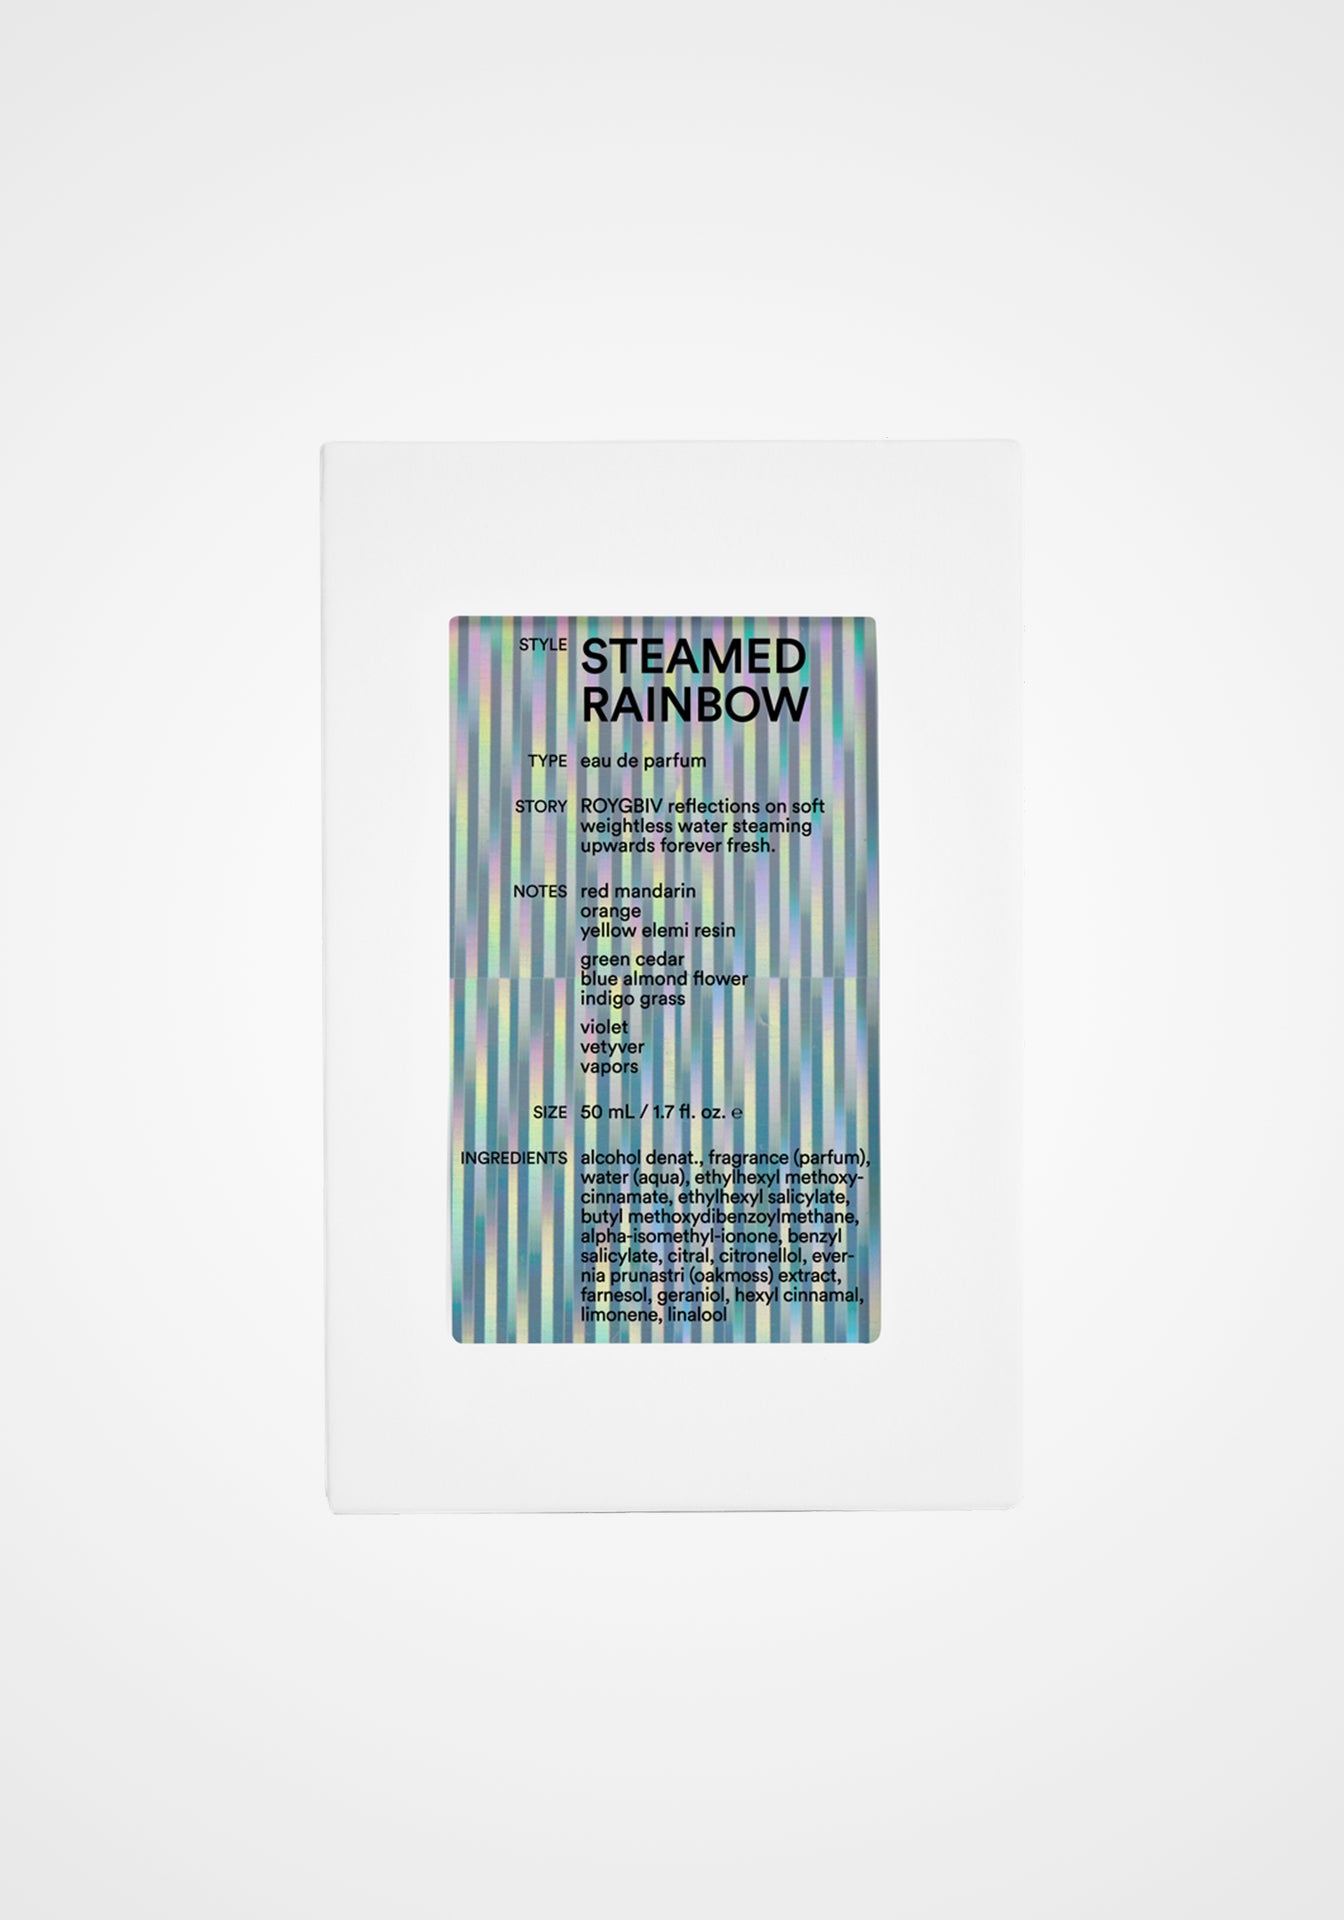 Steamed Rainbow Eau De Parfum, 50ml